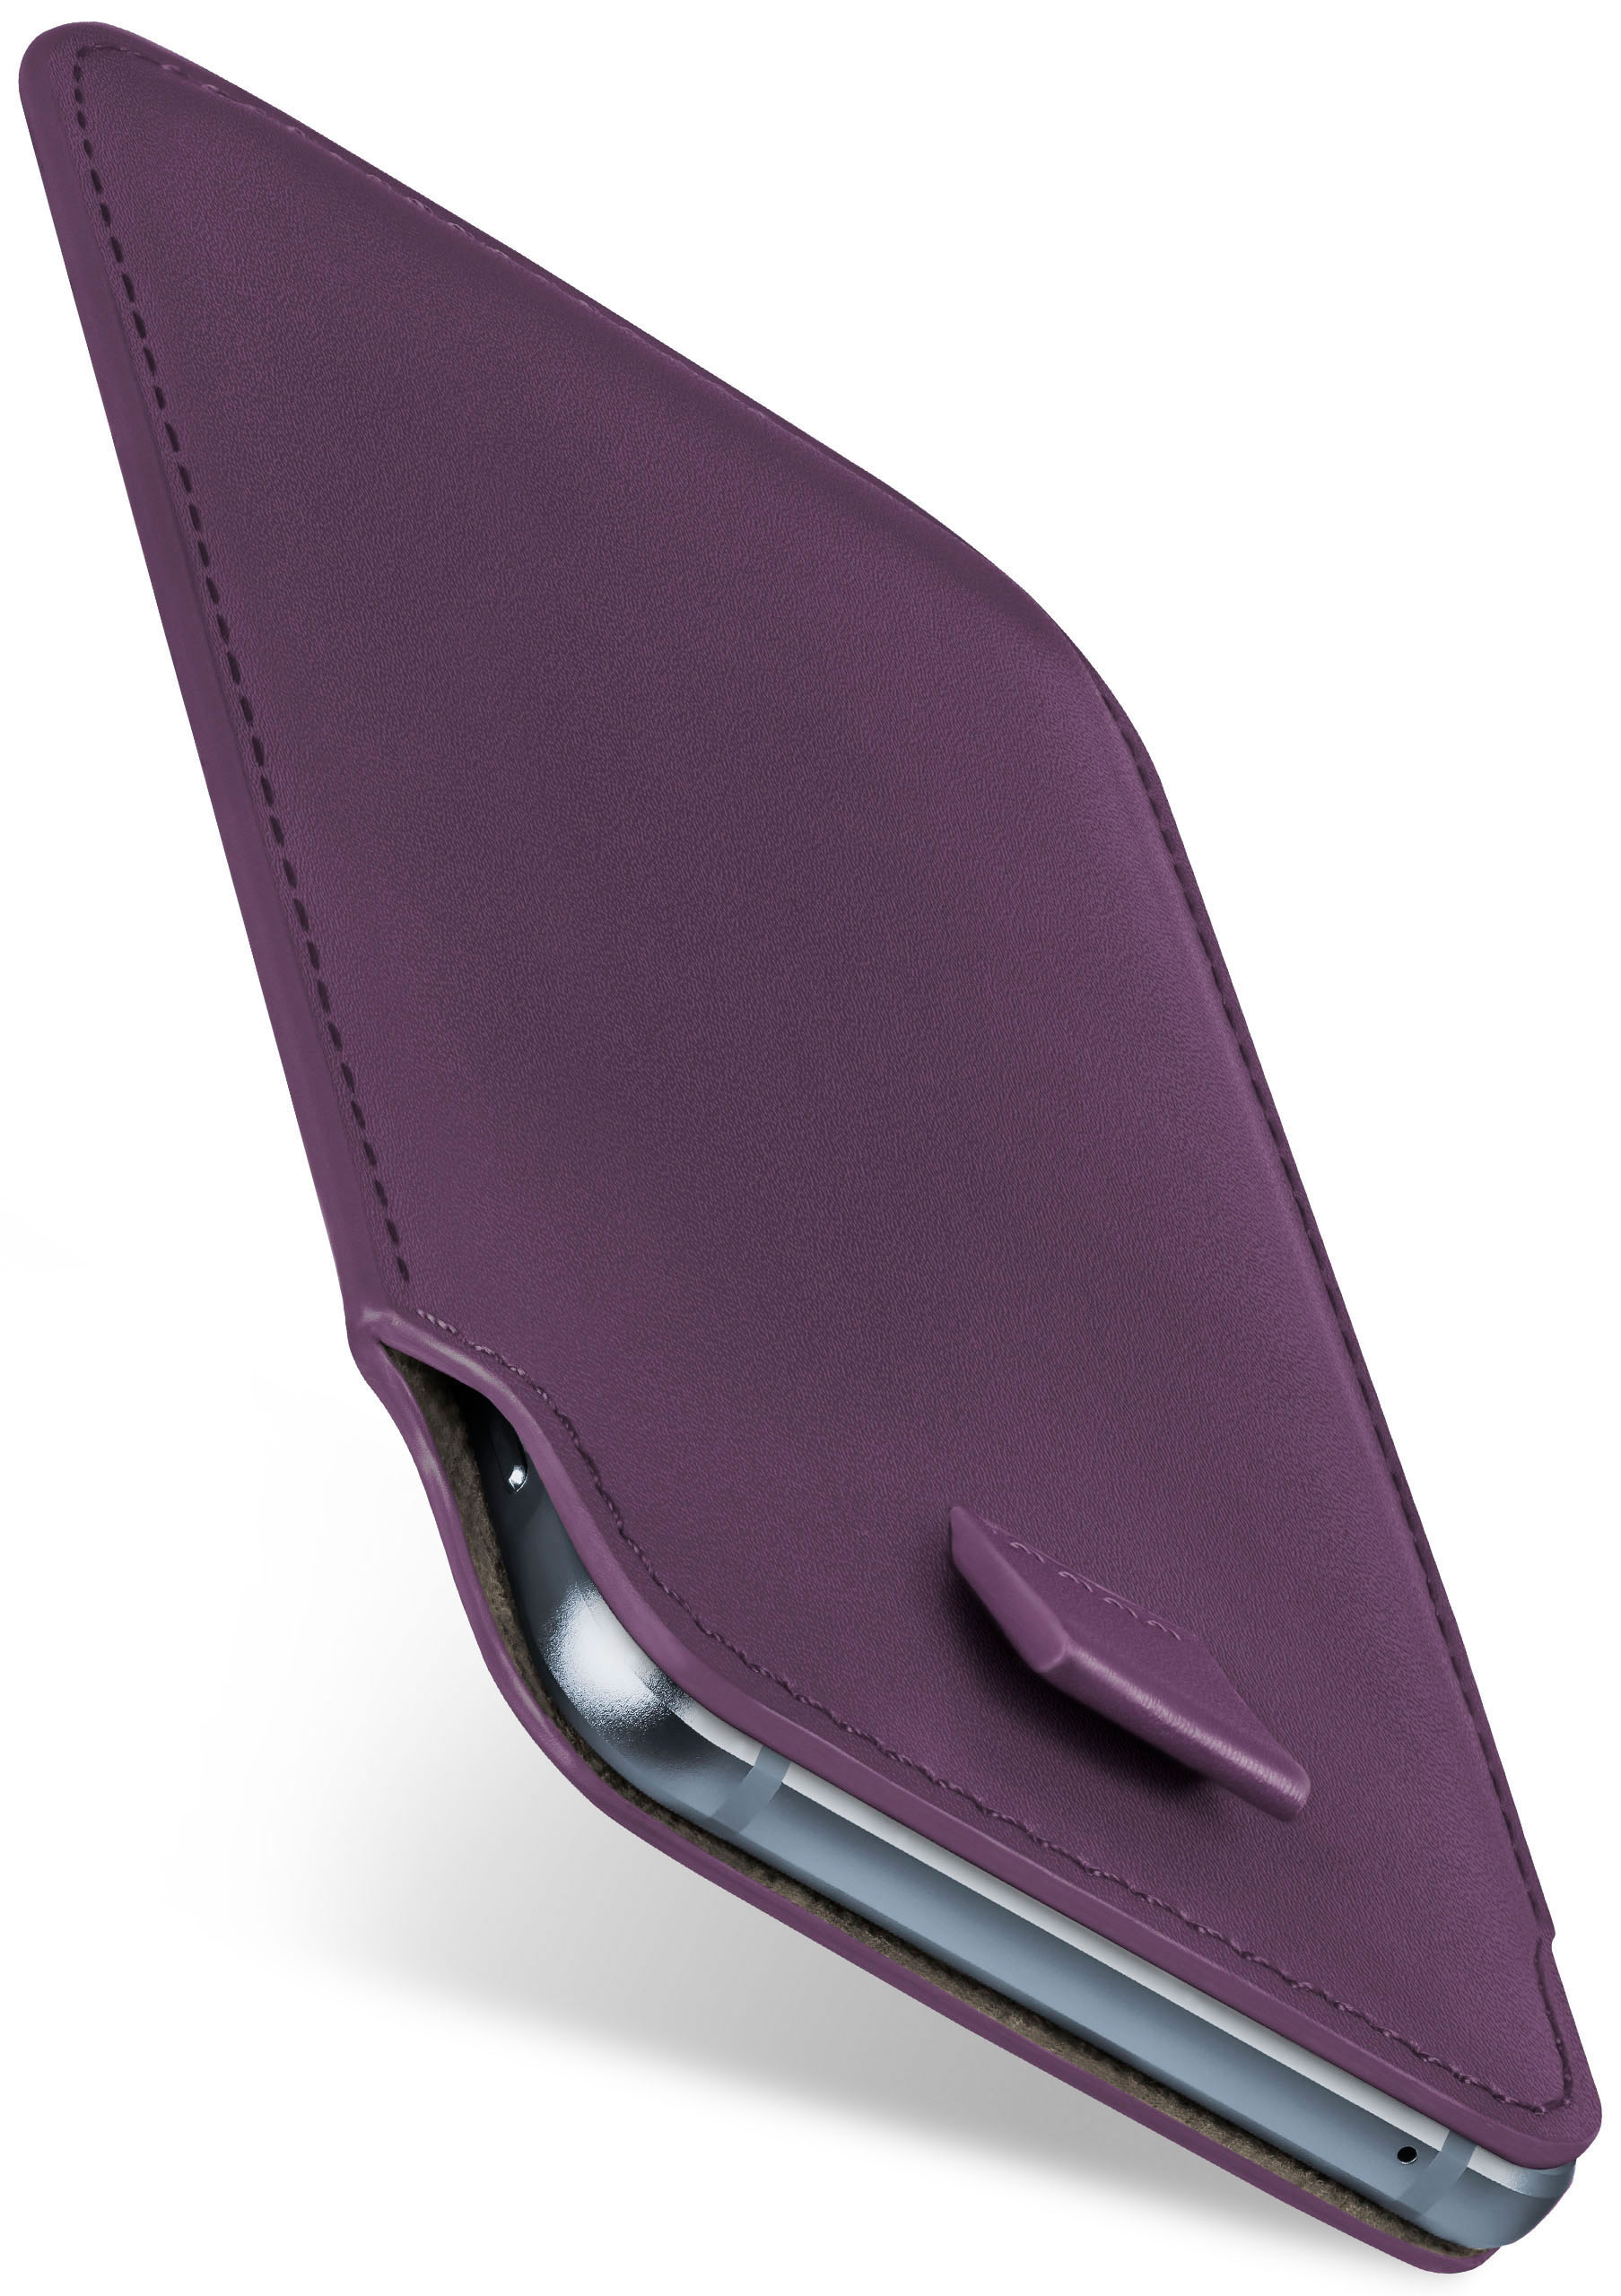 Elite x3, Slide Case, MOEX Indigo-Violet HP, Full Cover,